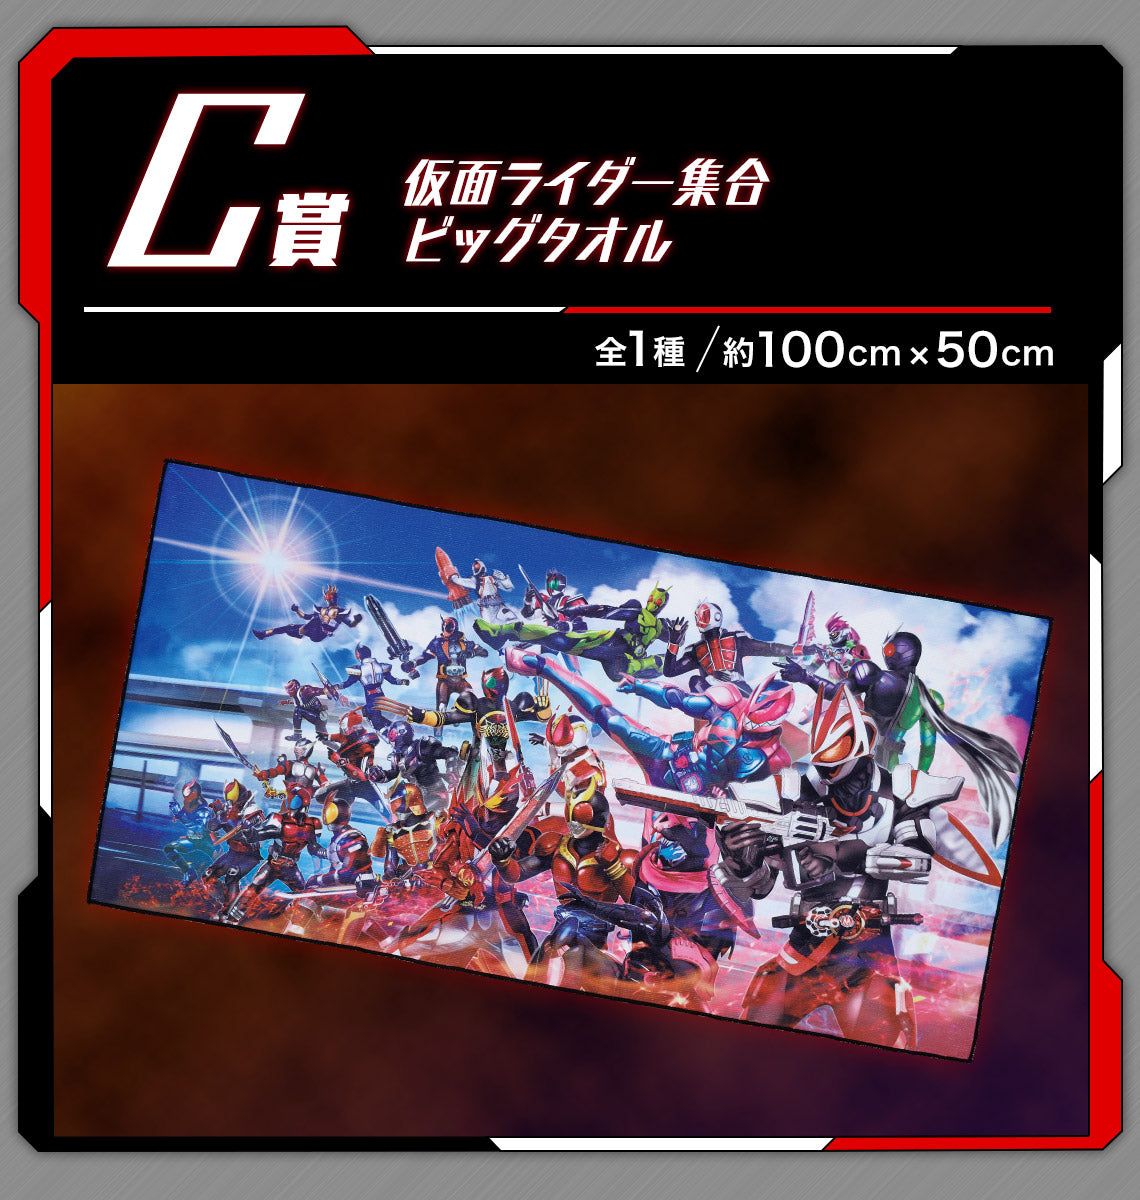 Ichiban Kuji Kamen Rider Geats With Legend Kamen Rider ~ Next Battle!-Bandai-Ace Cards &amp; Collectibles